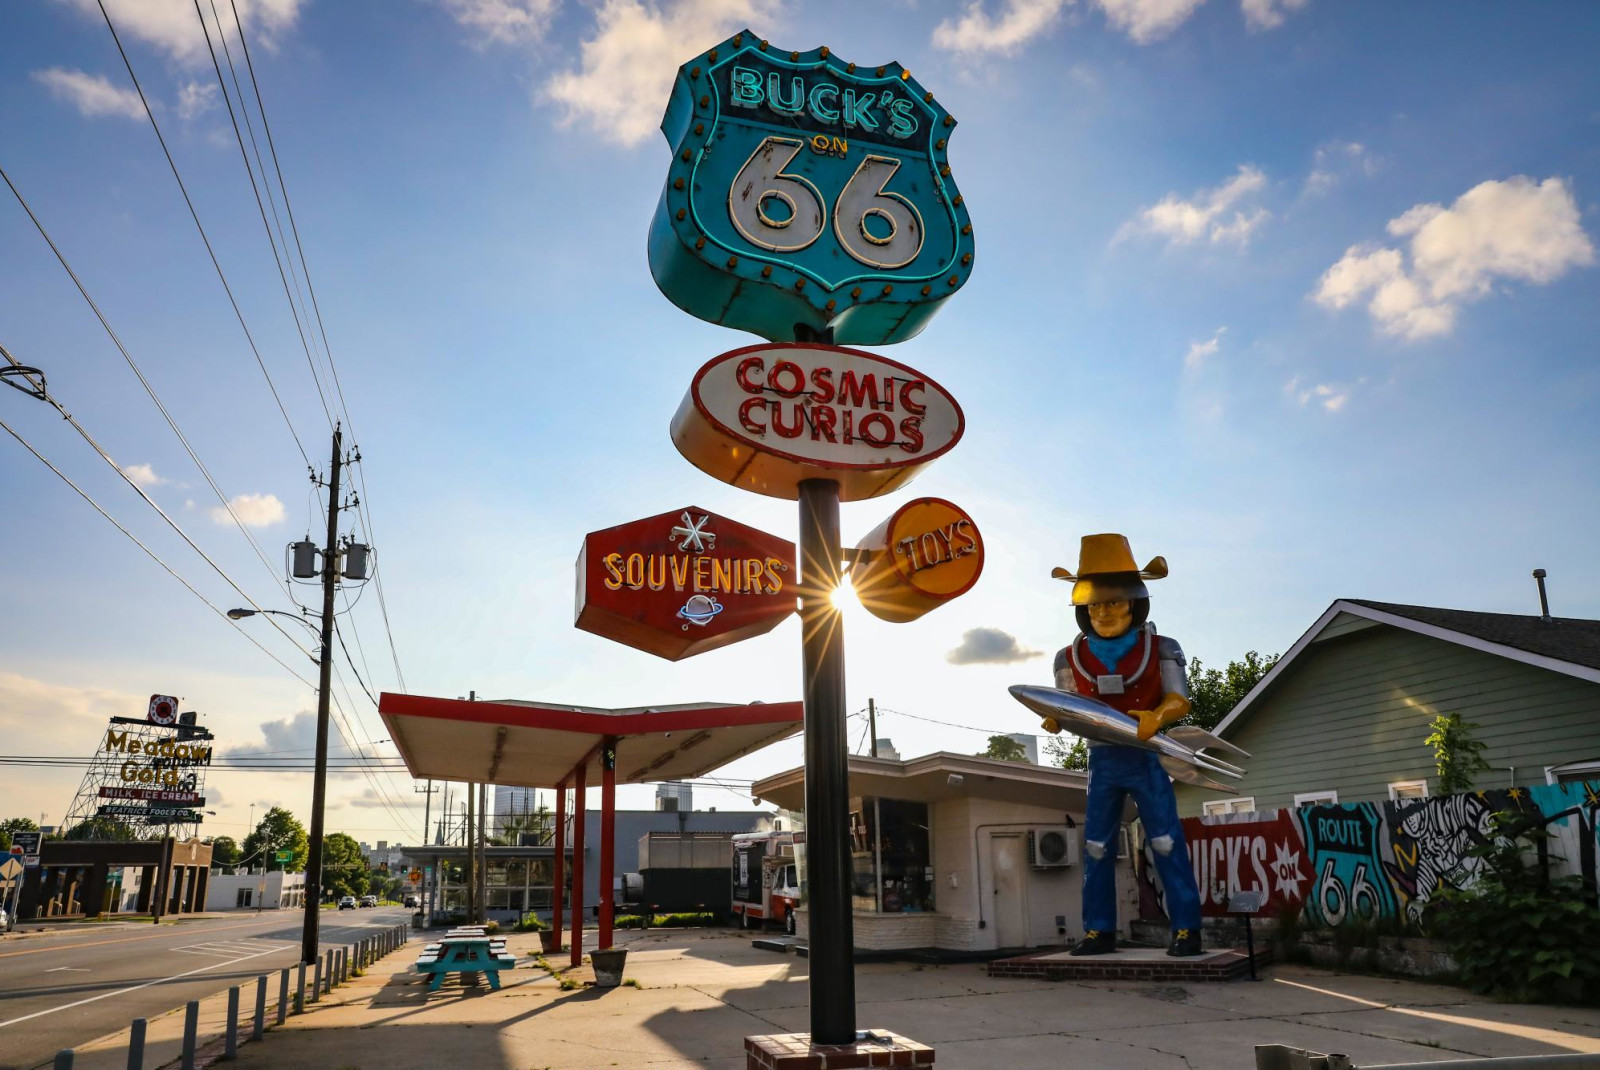 Neon Route 66 sign in Tulsa. 